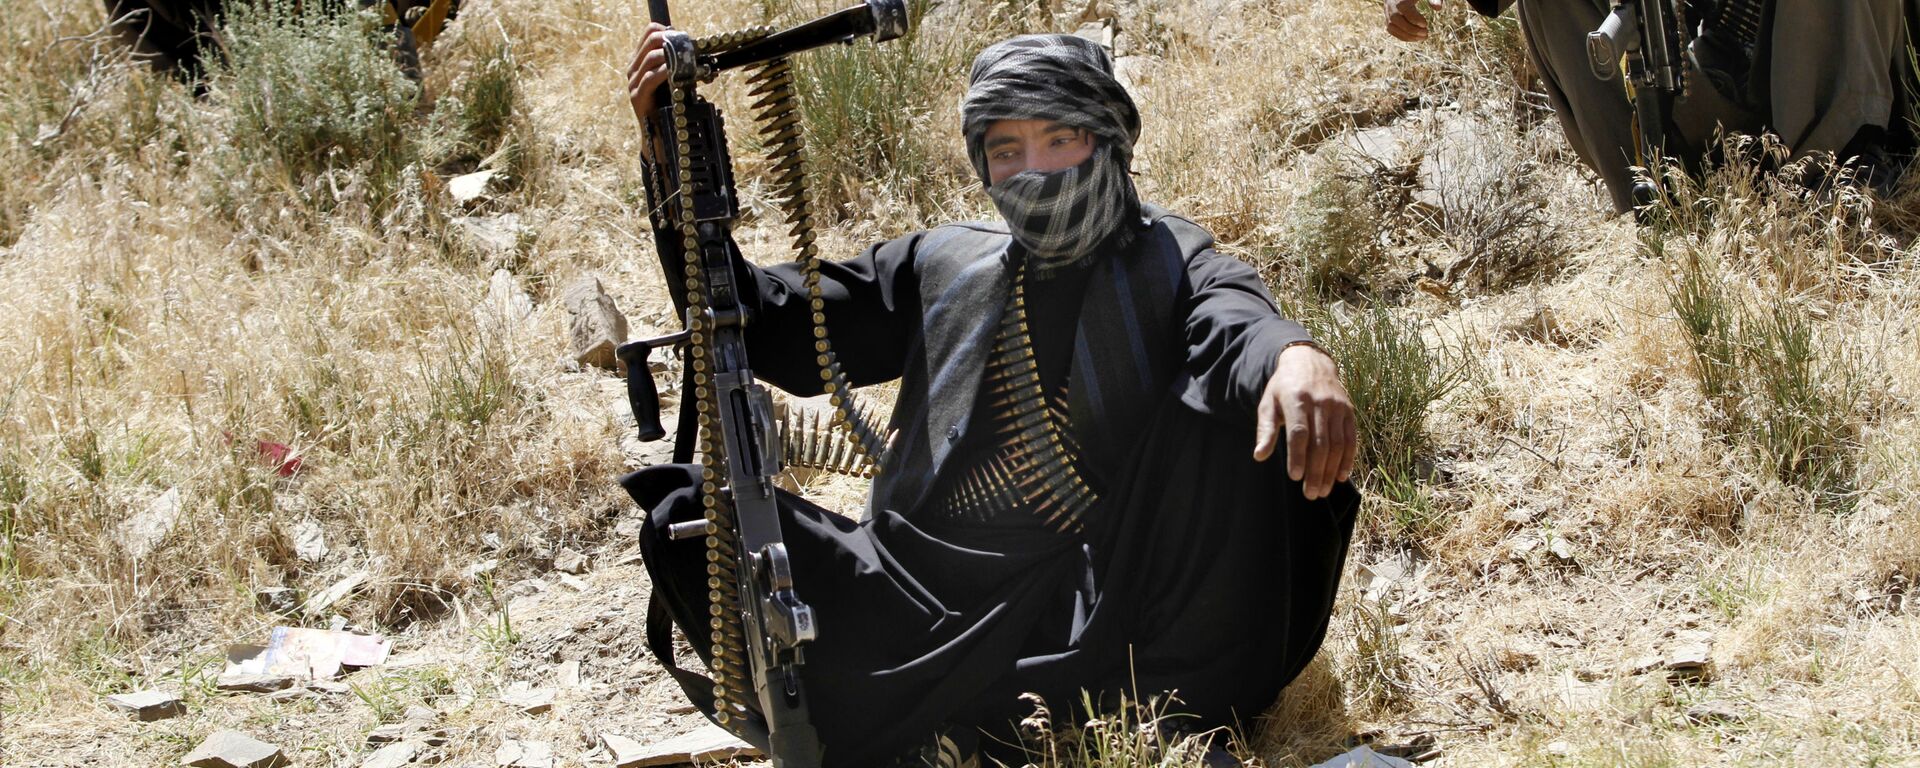 Члены террористического движения Талибан в Афганистане - Sputnik Таджикистан, 1920, 18.08.2021